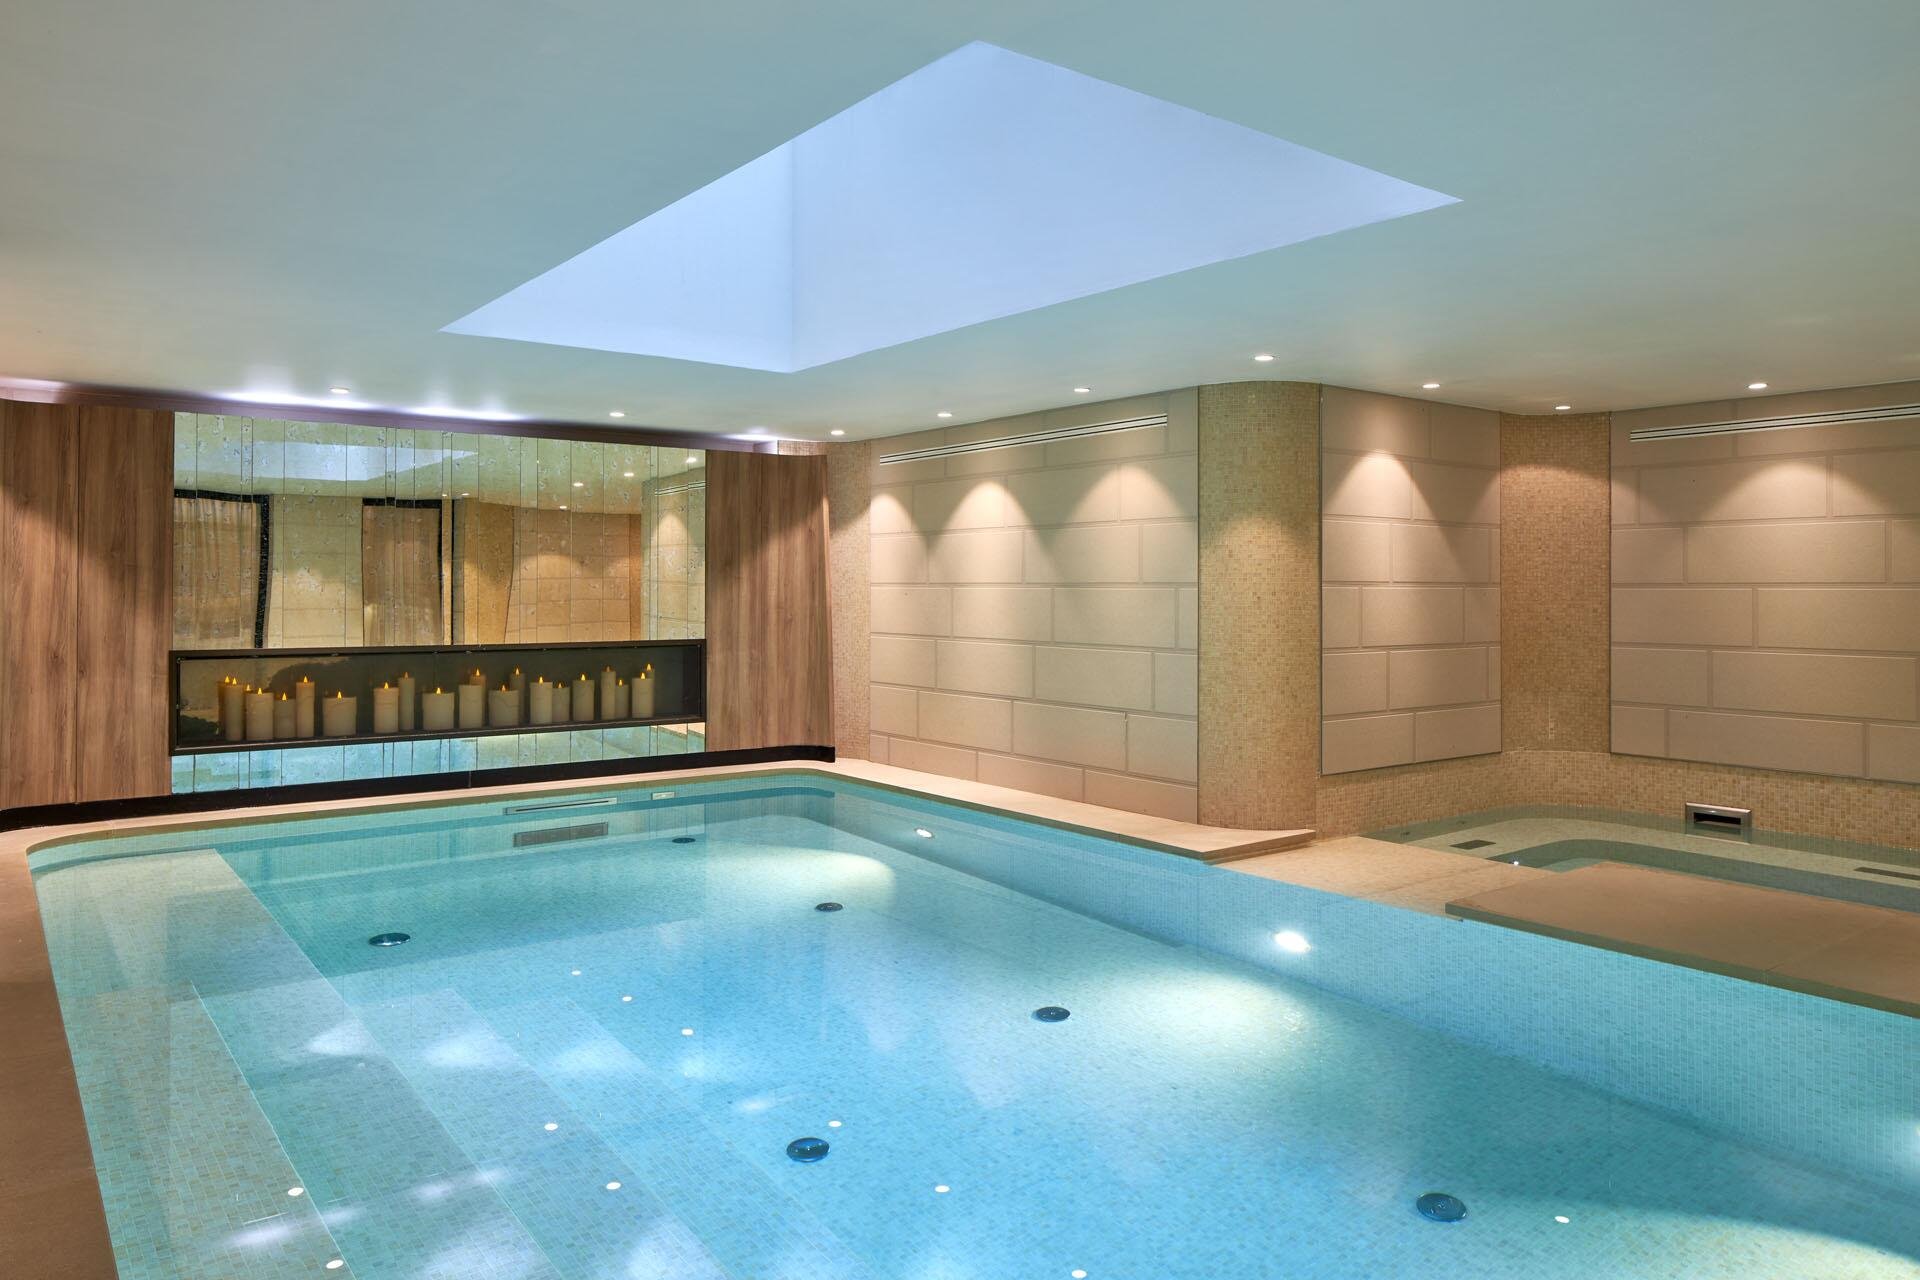 Maison Albar Hotels Le Pont-Neuf | Hotel indoor pool Paris